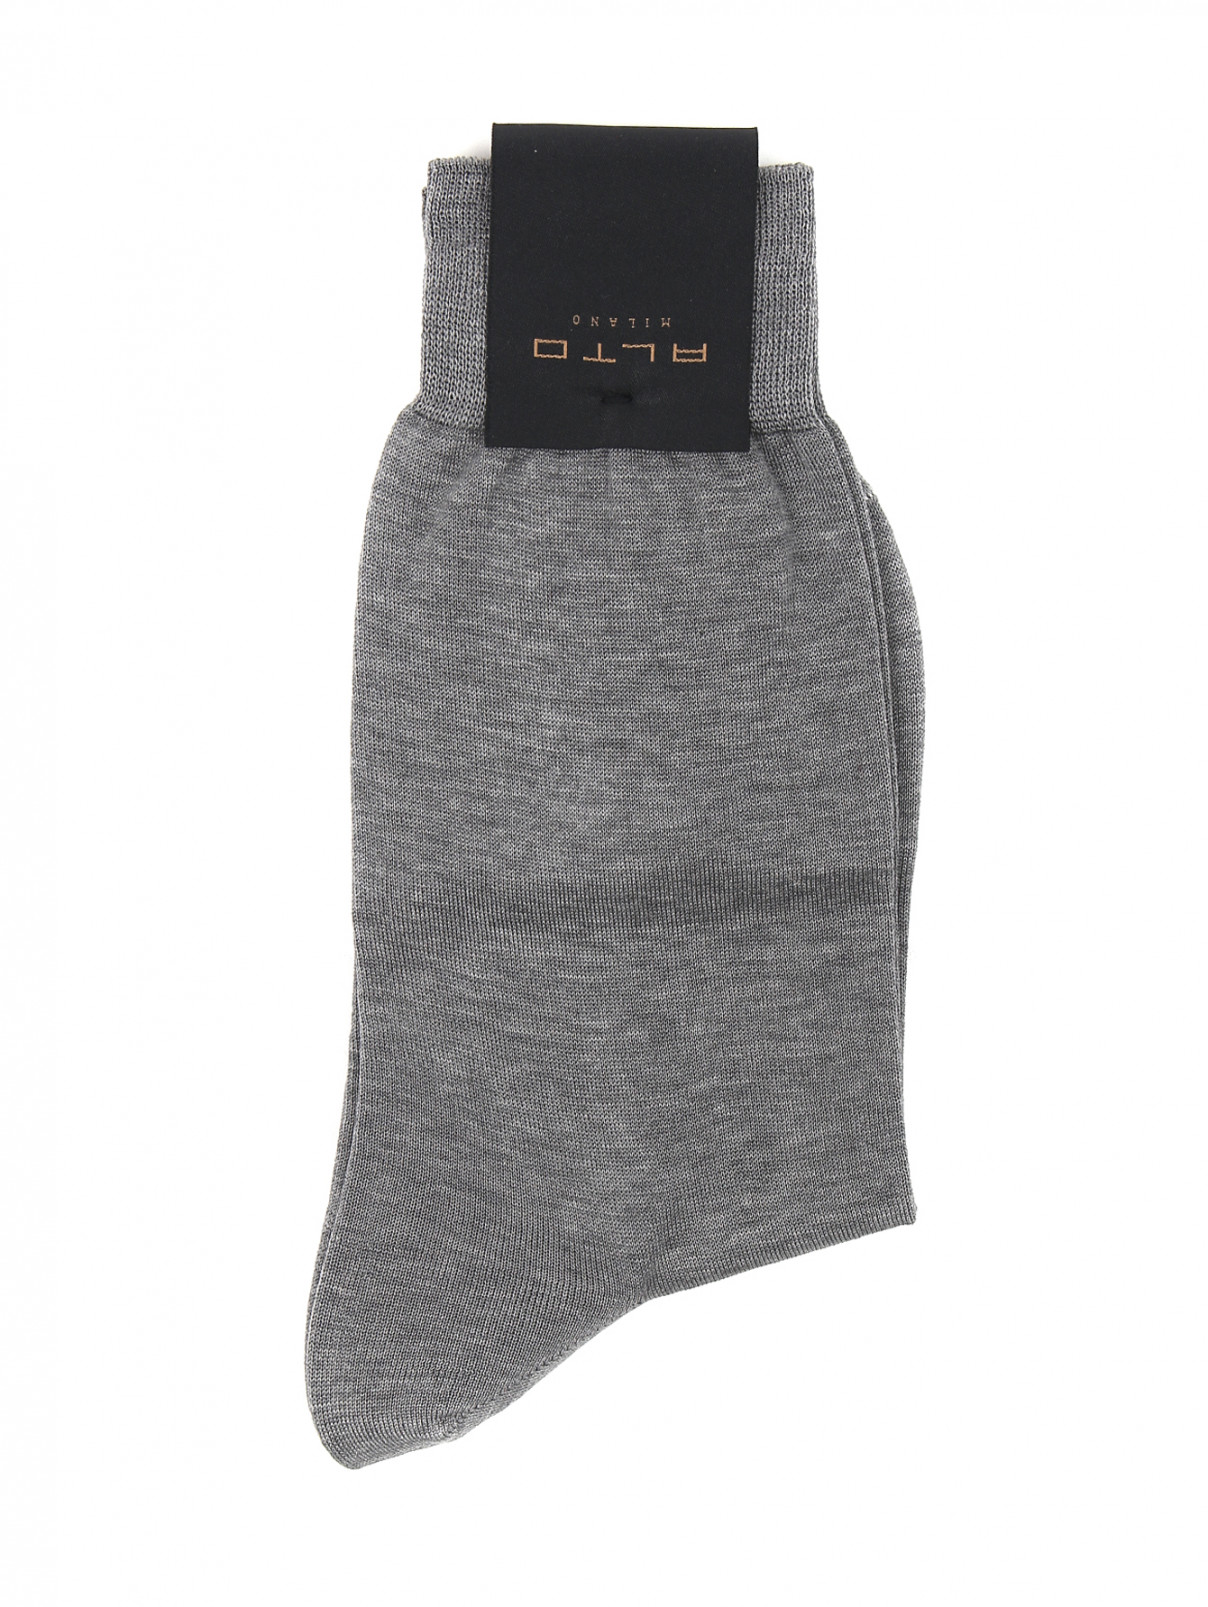 Носки из хлопка Peekaboo  –  Общий вид  – Цвет:  Серый